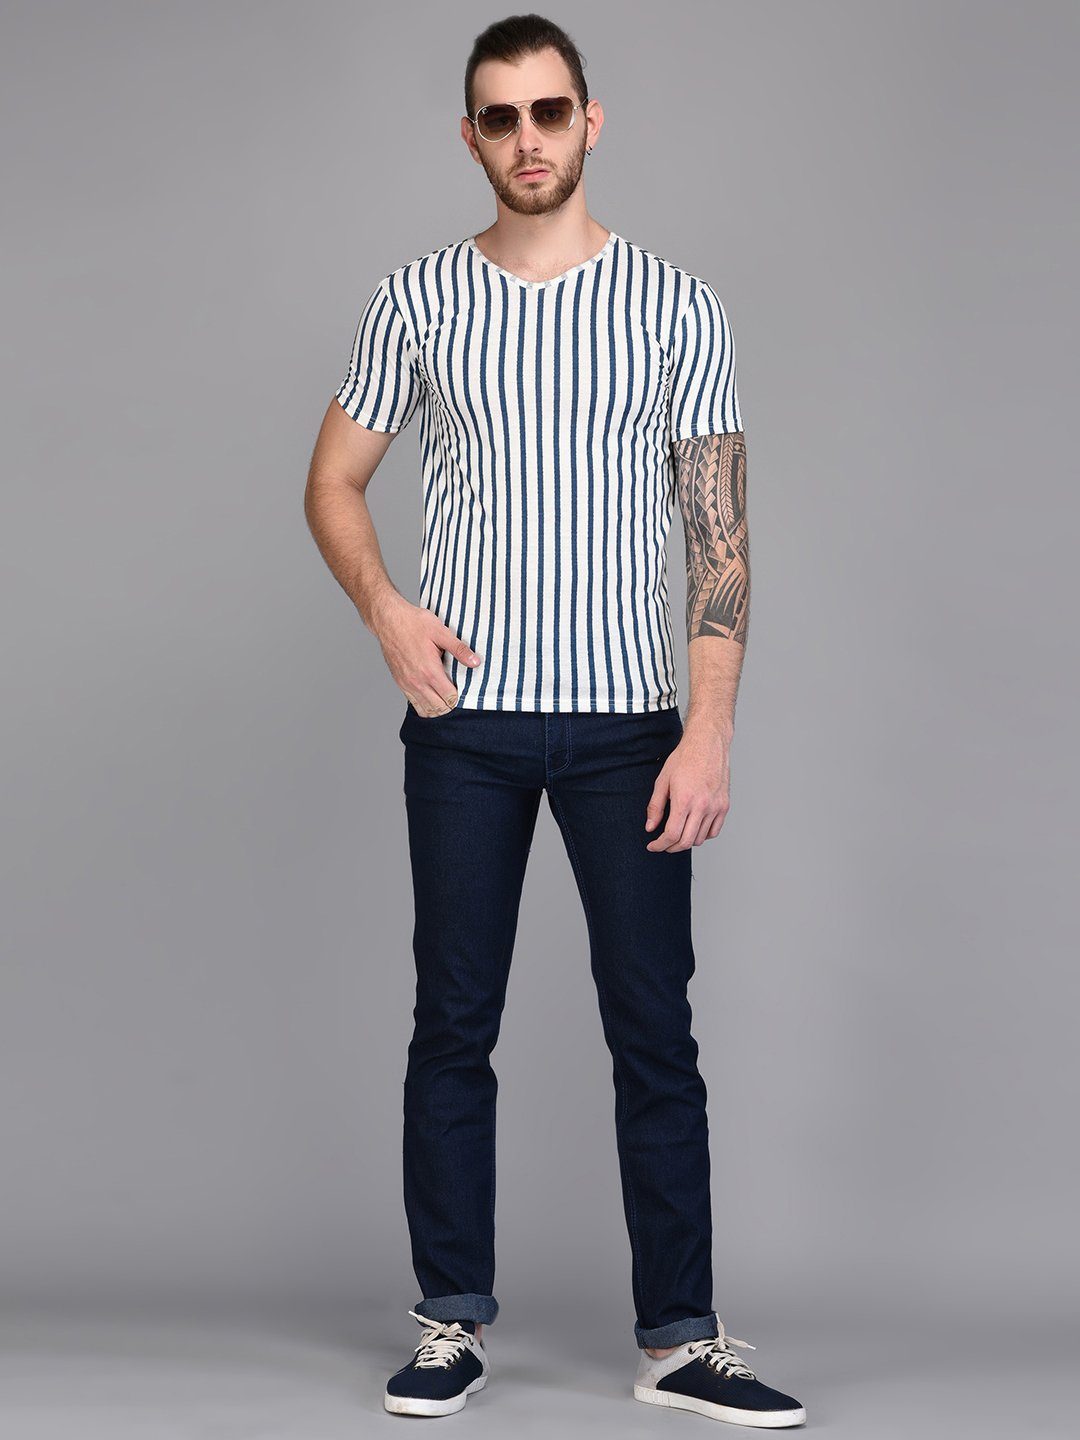 Vertical Striped Blue & White T-shirt